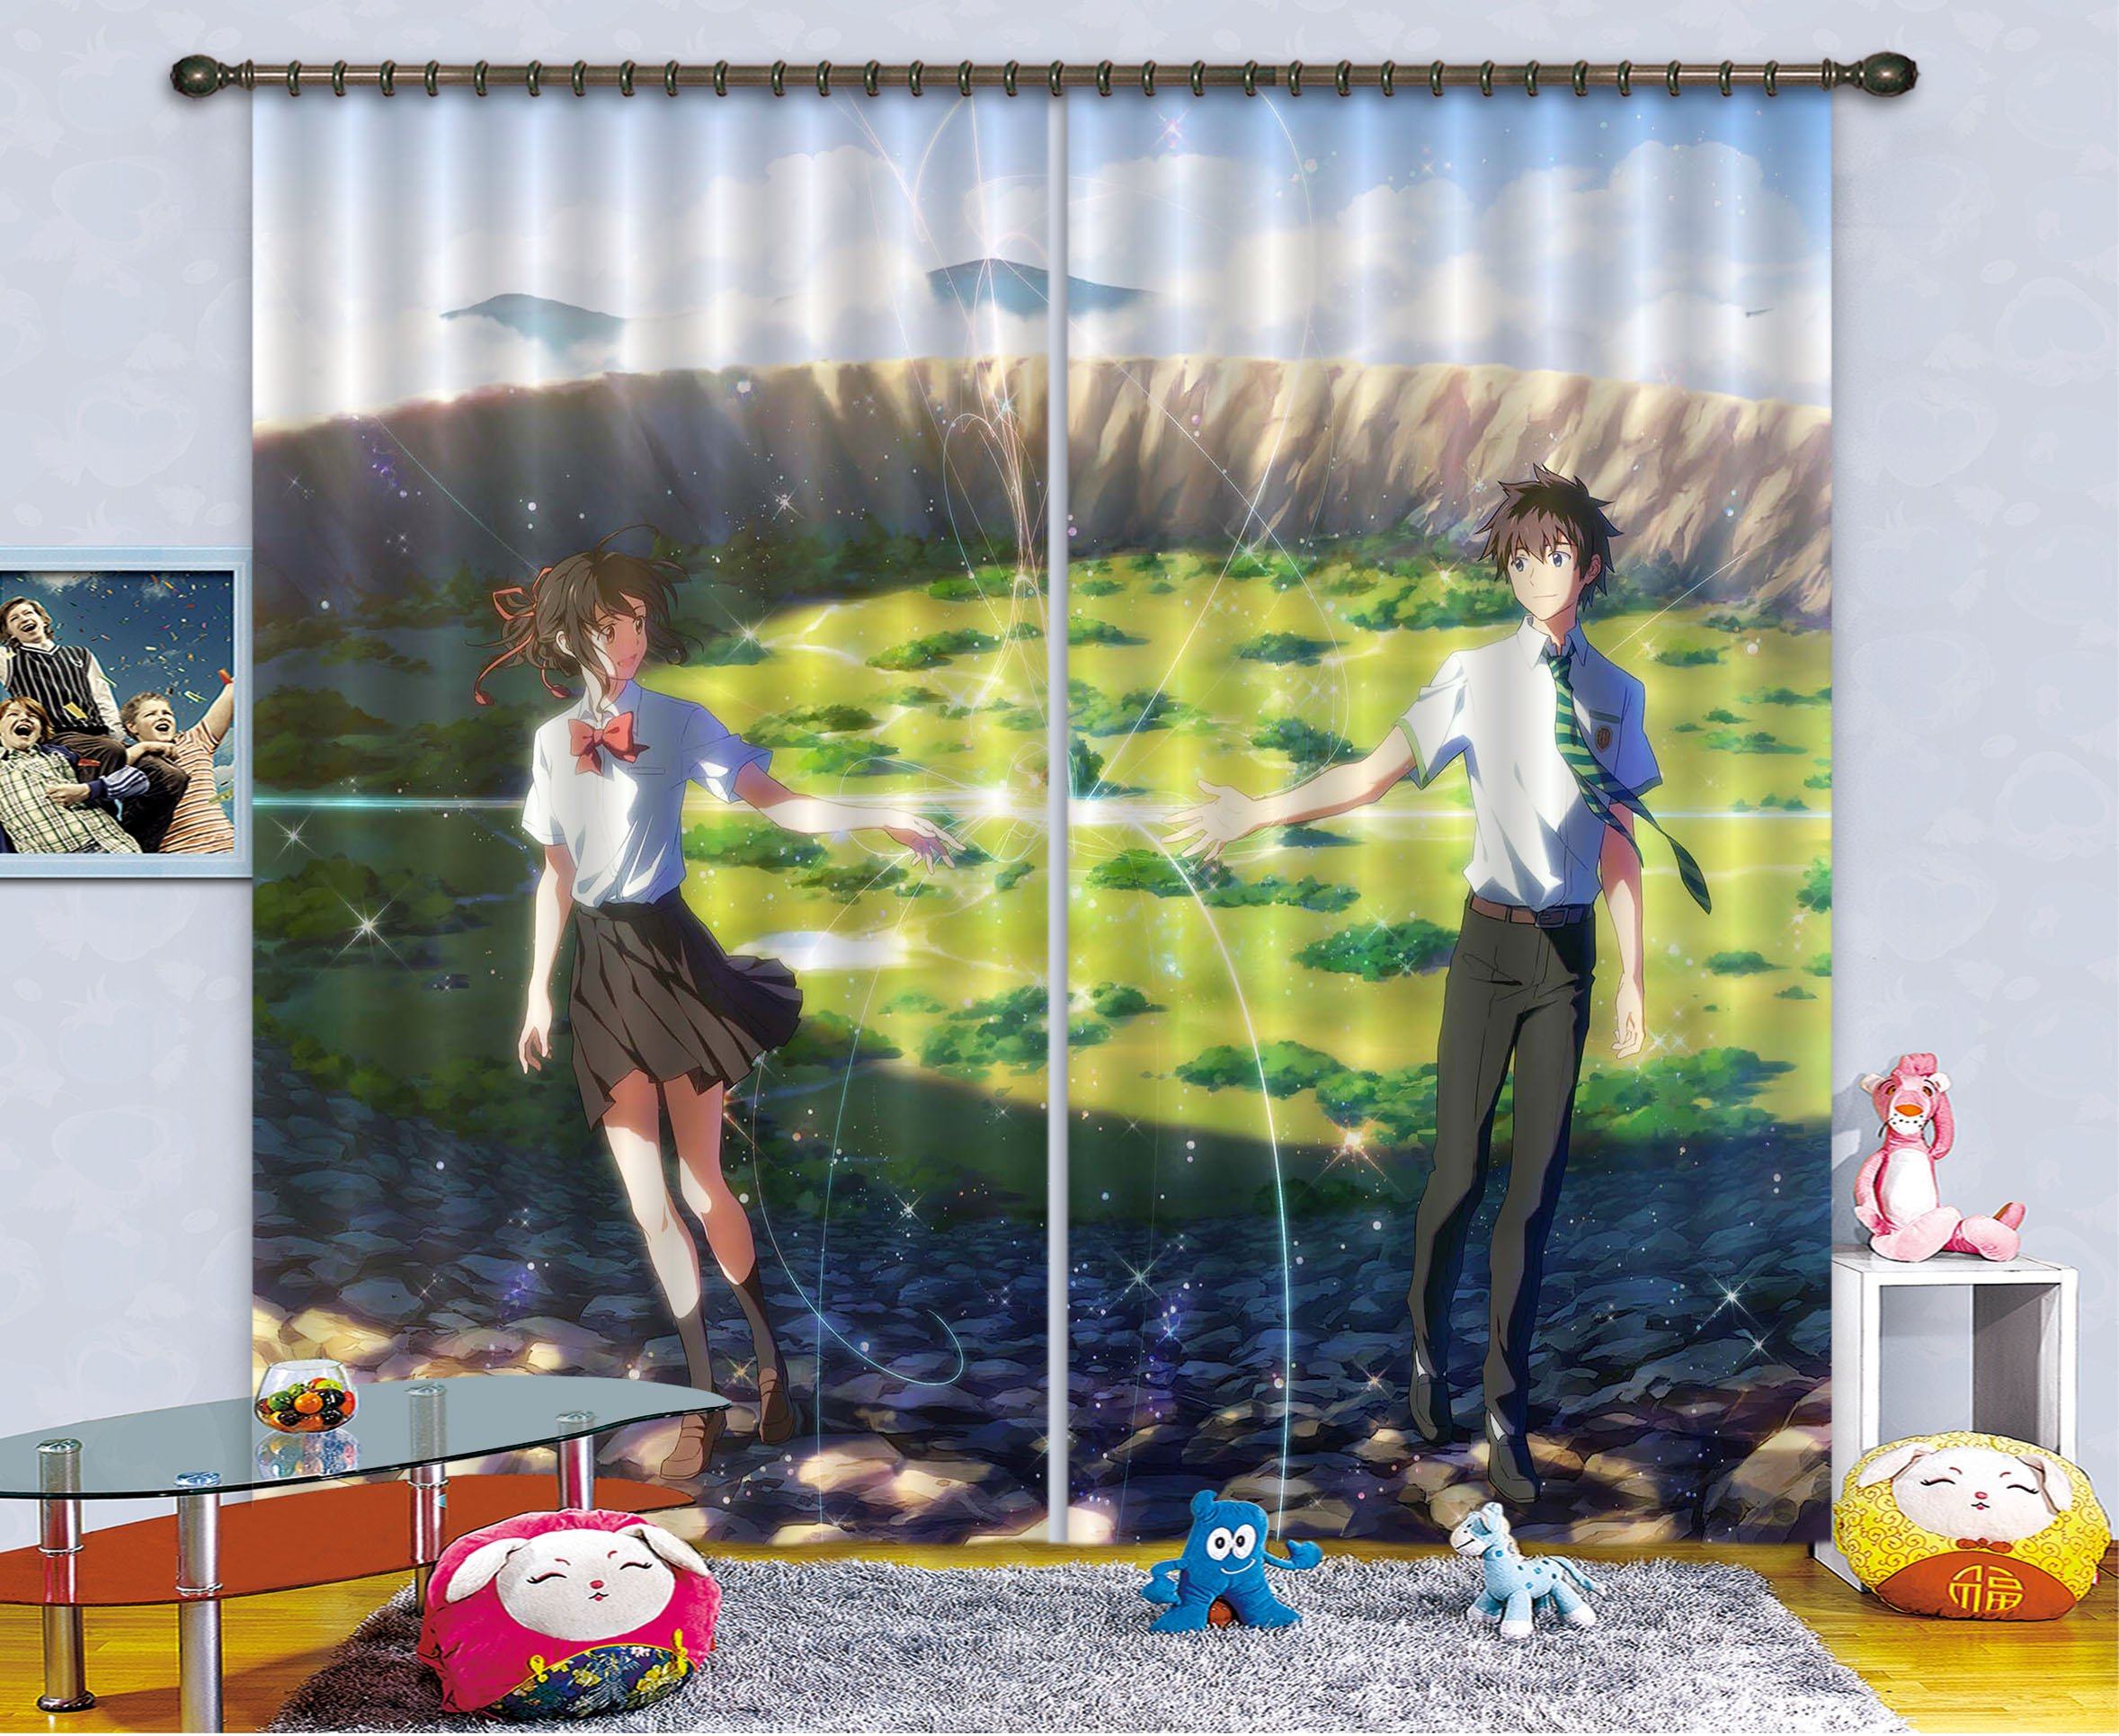 3D Boy And Girl 2417 Curtains Drapes Wallpaper AJ Wallpaper 